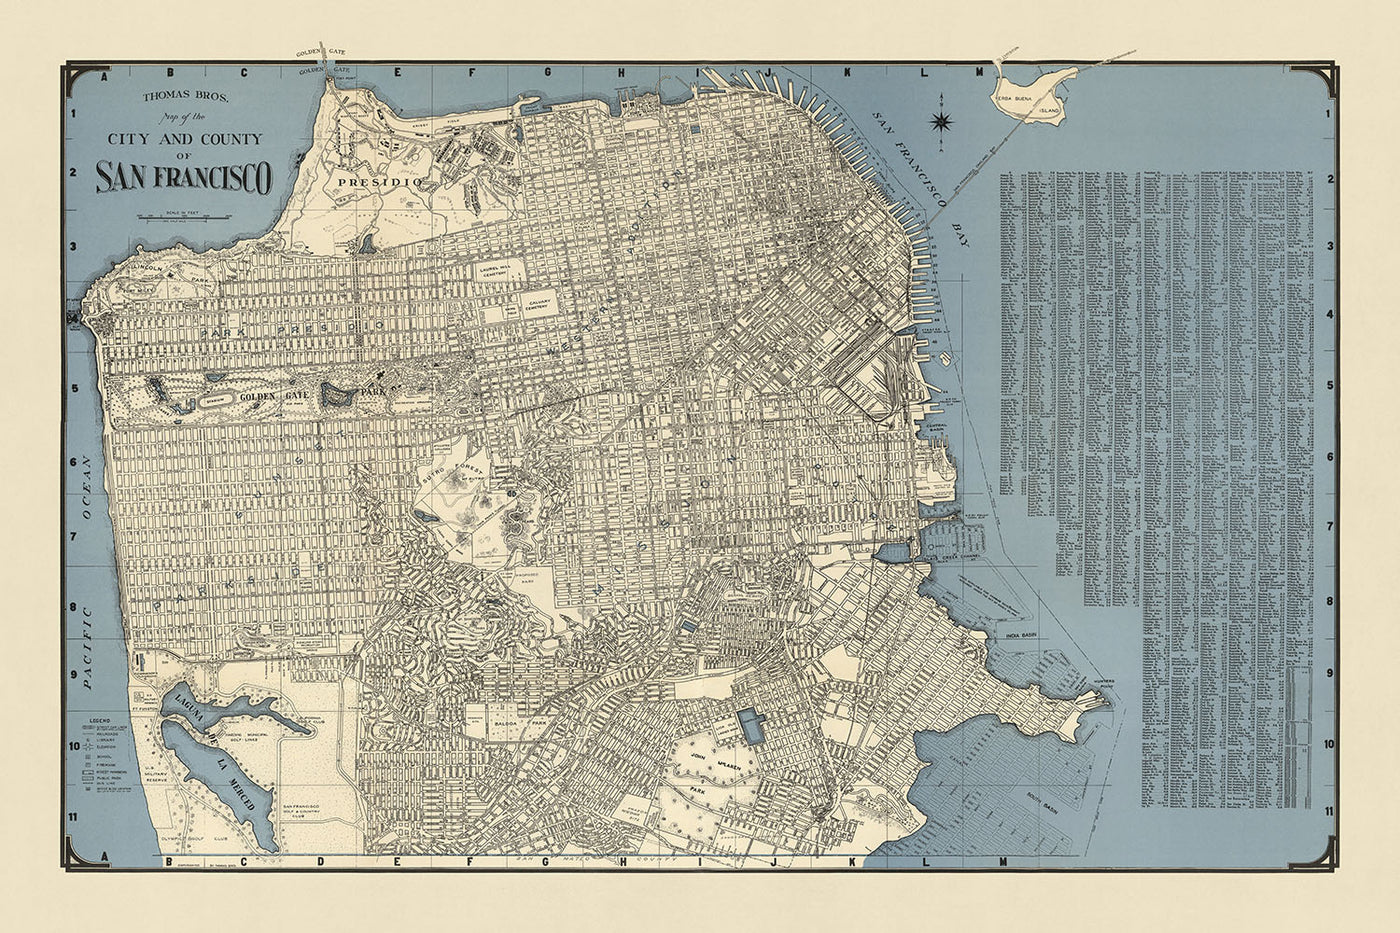 Mapa antiguo de San Francisco, 1938: Puente Golden Gate, Chinatown, Presidio, Fisherman's Wharf, Alcatraz